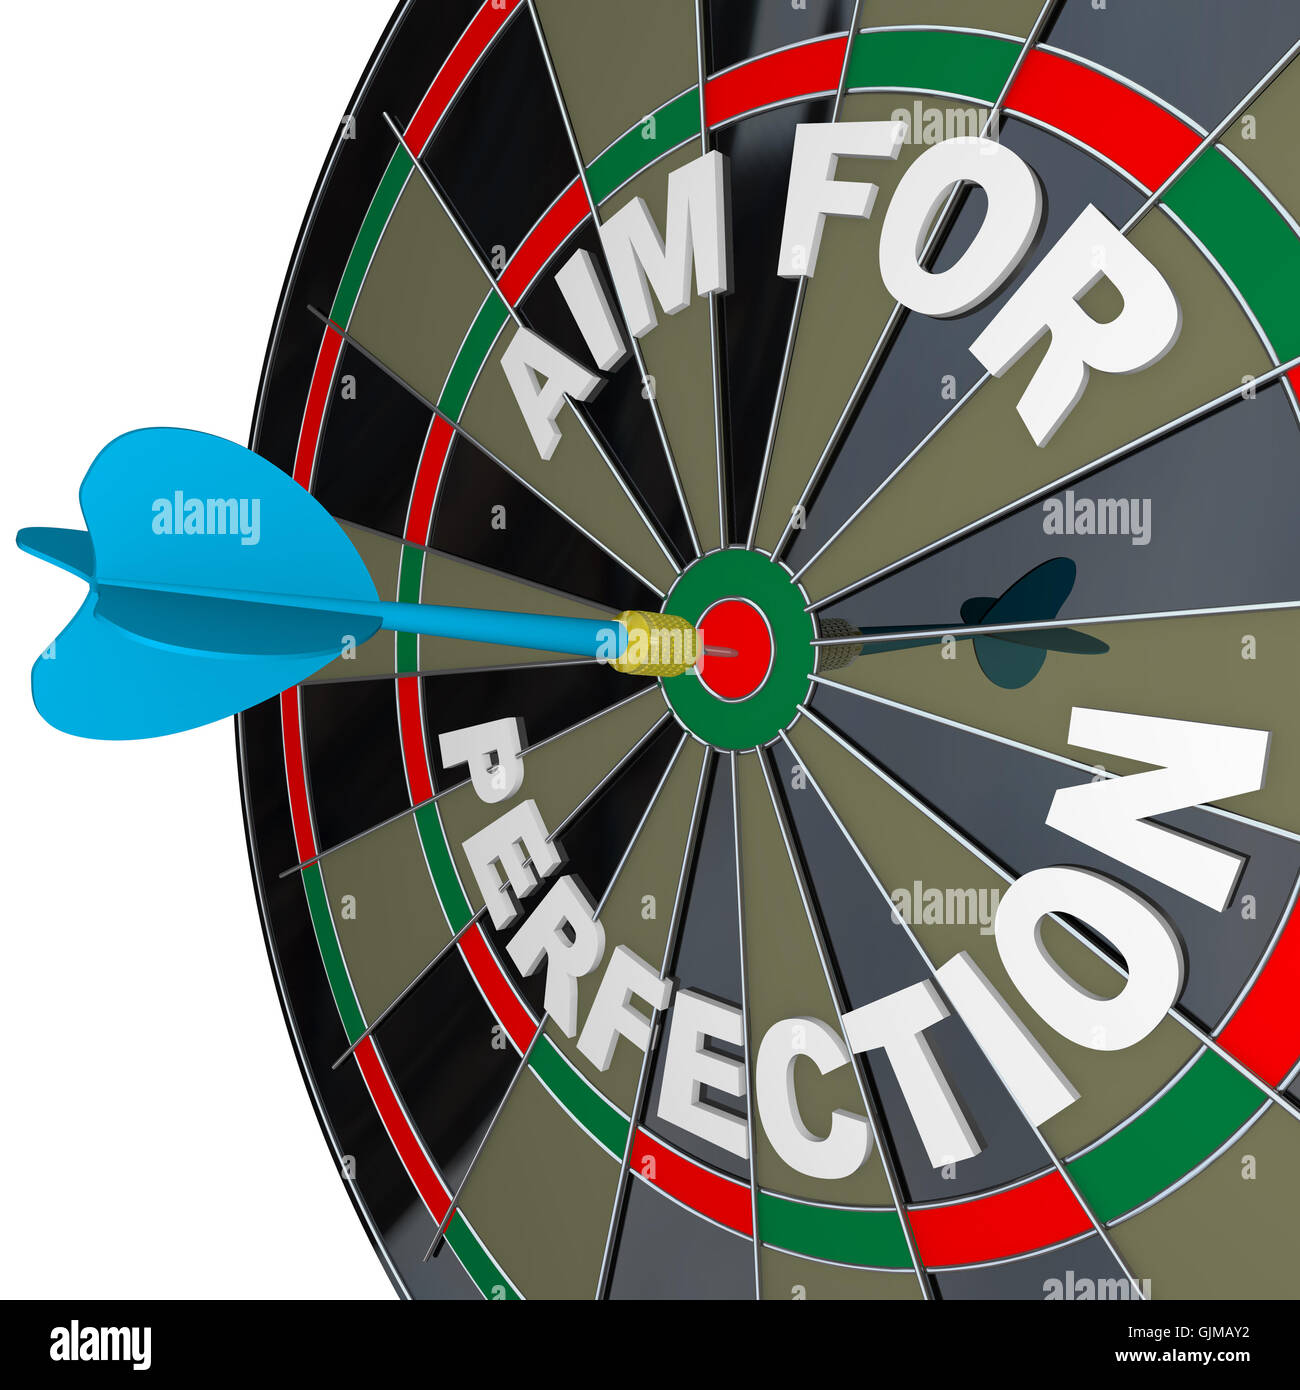 Aim for Perfection - Dart Hits Target Bulls-Eye on Dartboard Stock Photo